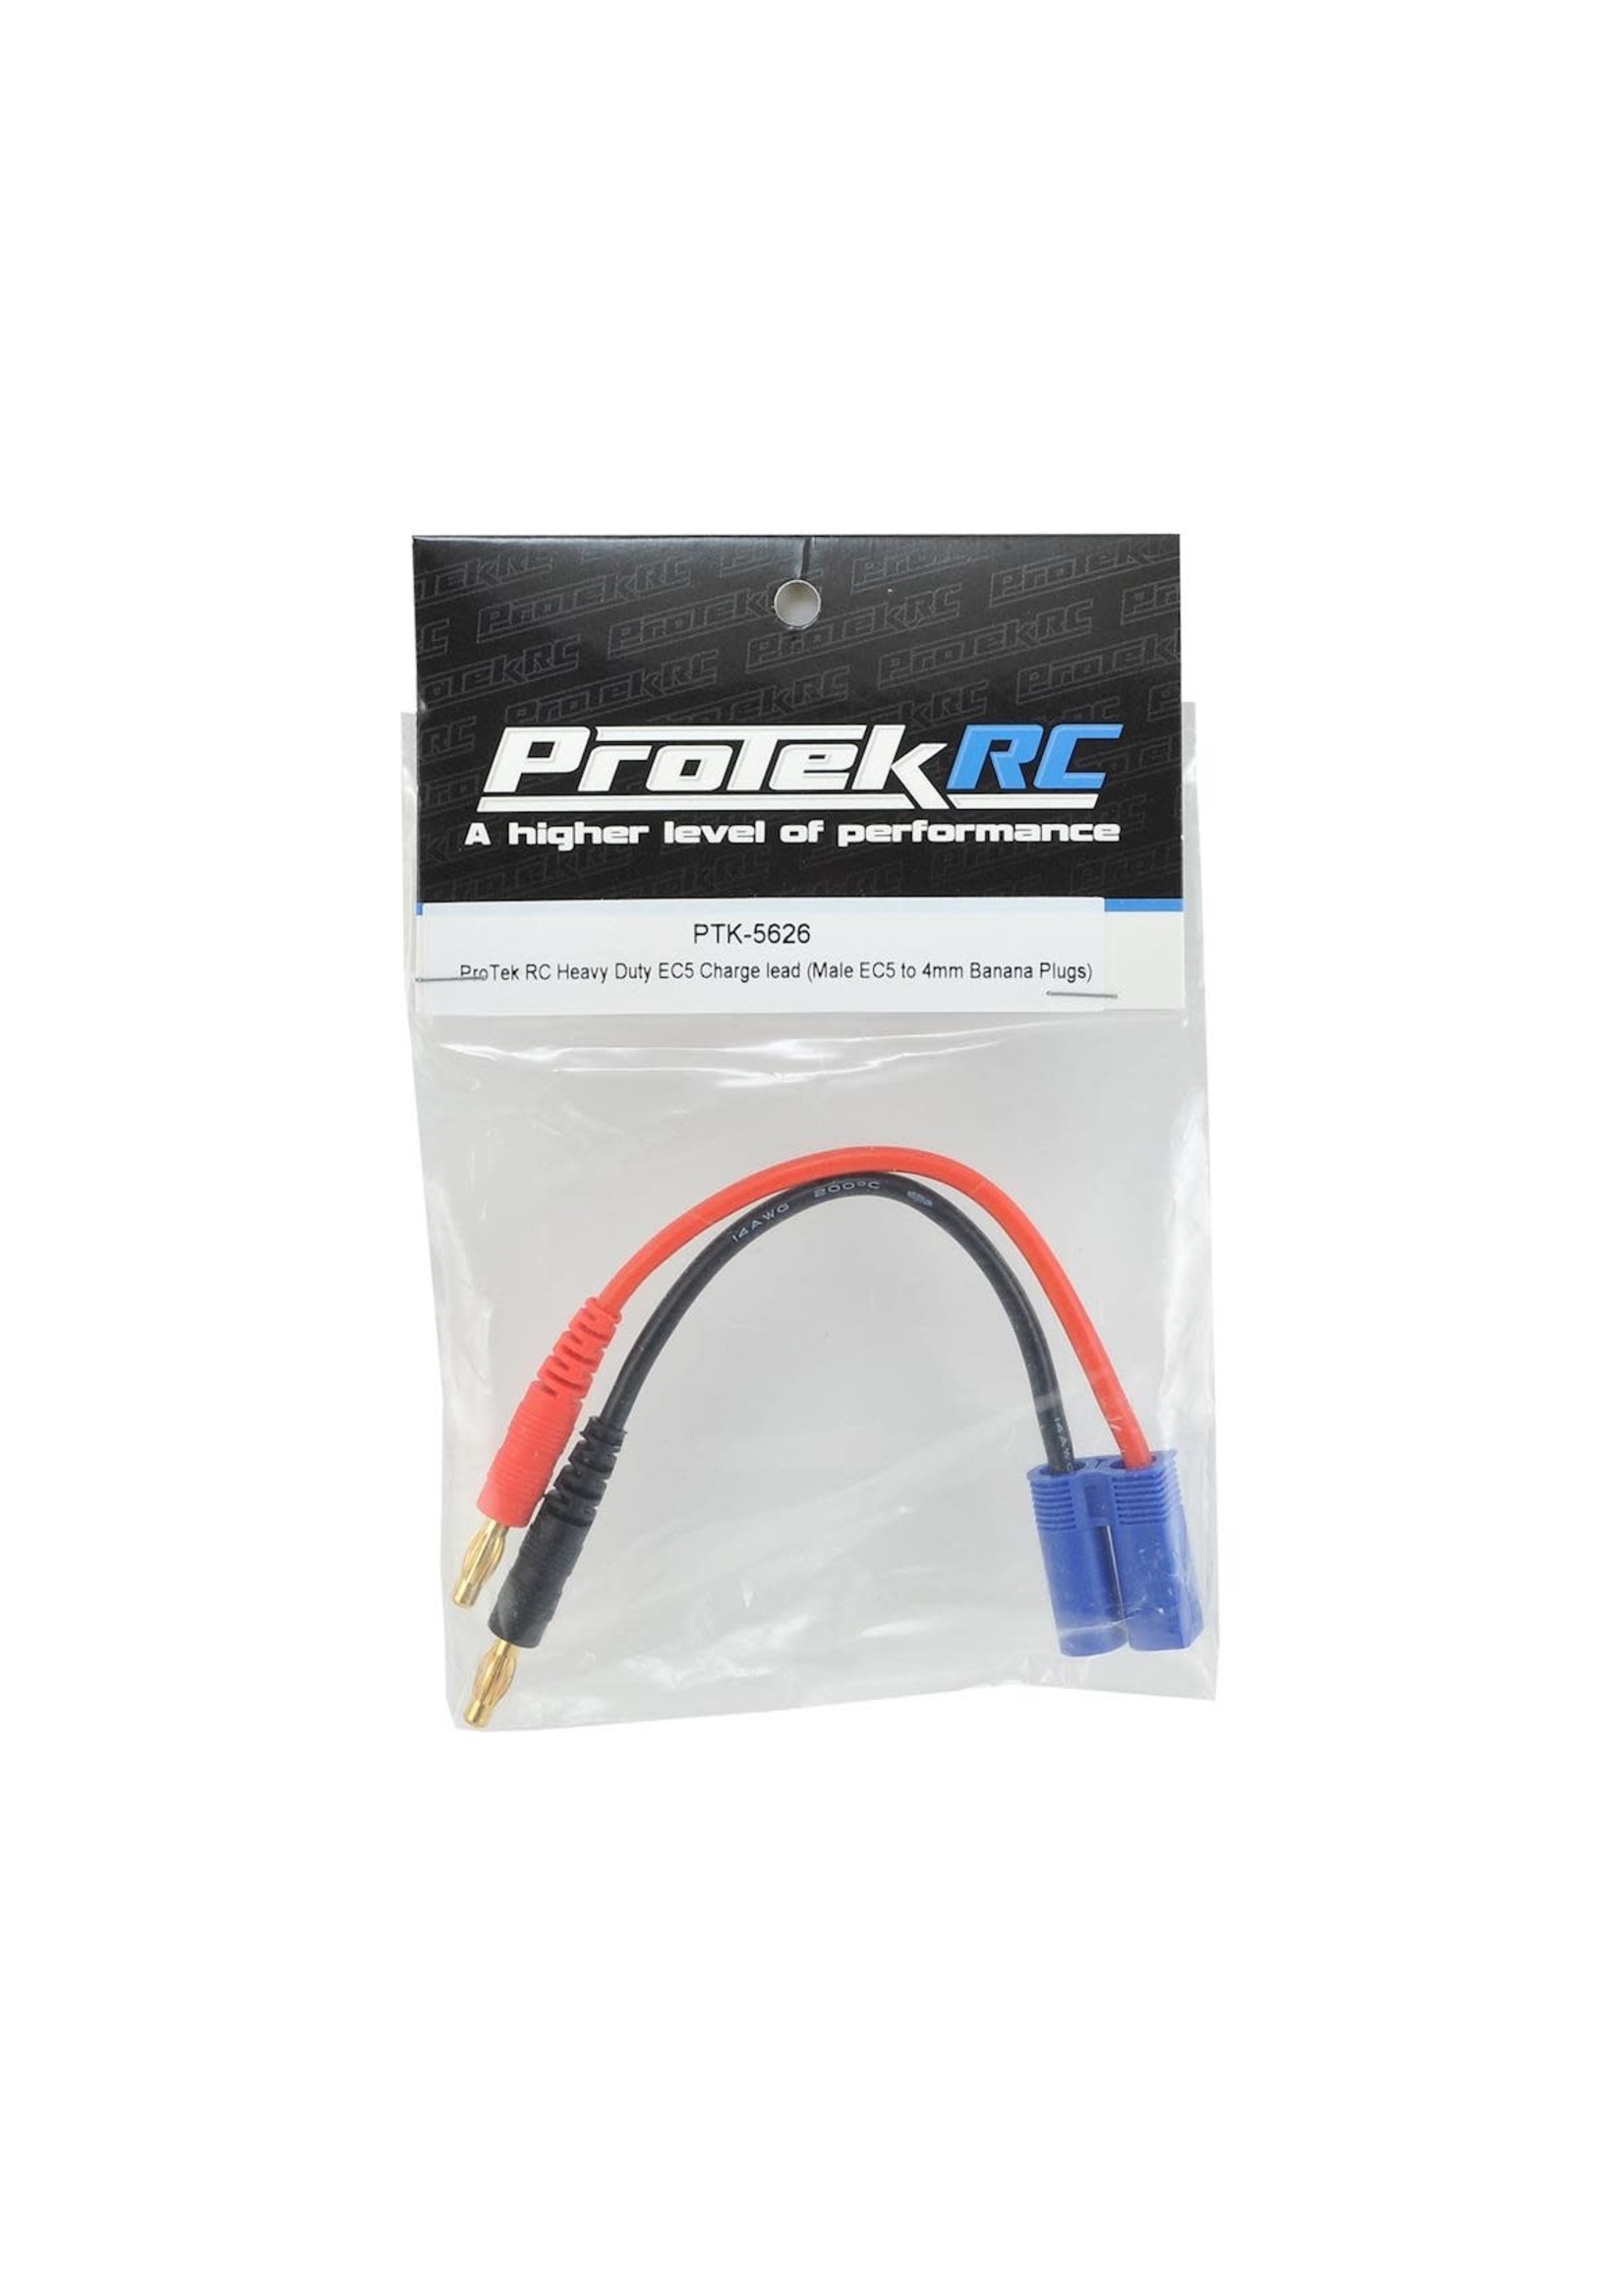 ProTek RC PTK-5626 ProTek RC Heavy Duty EC5 Charge Lead (Male EC5 to 4mm Banana Plugs)